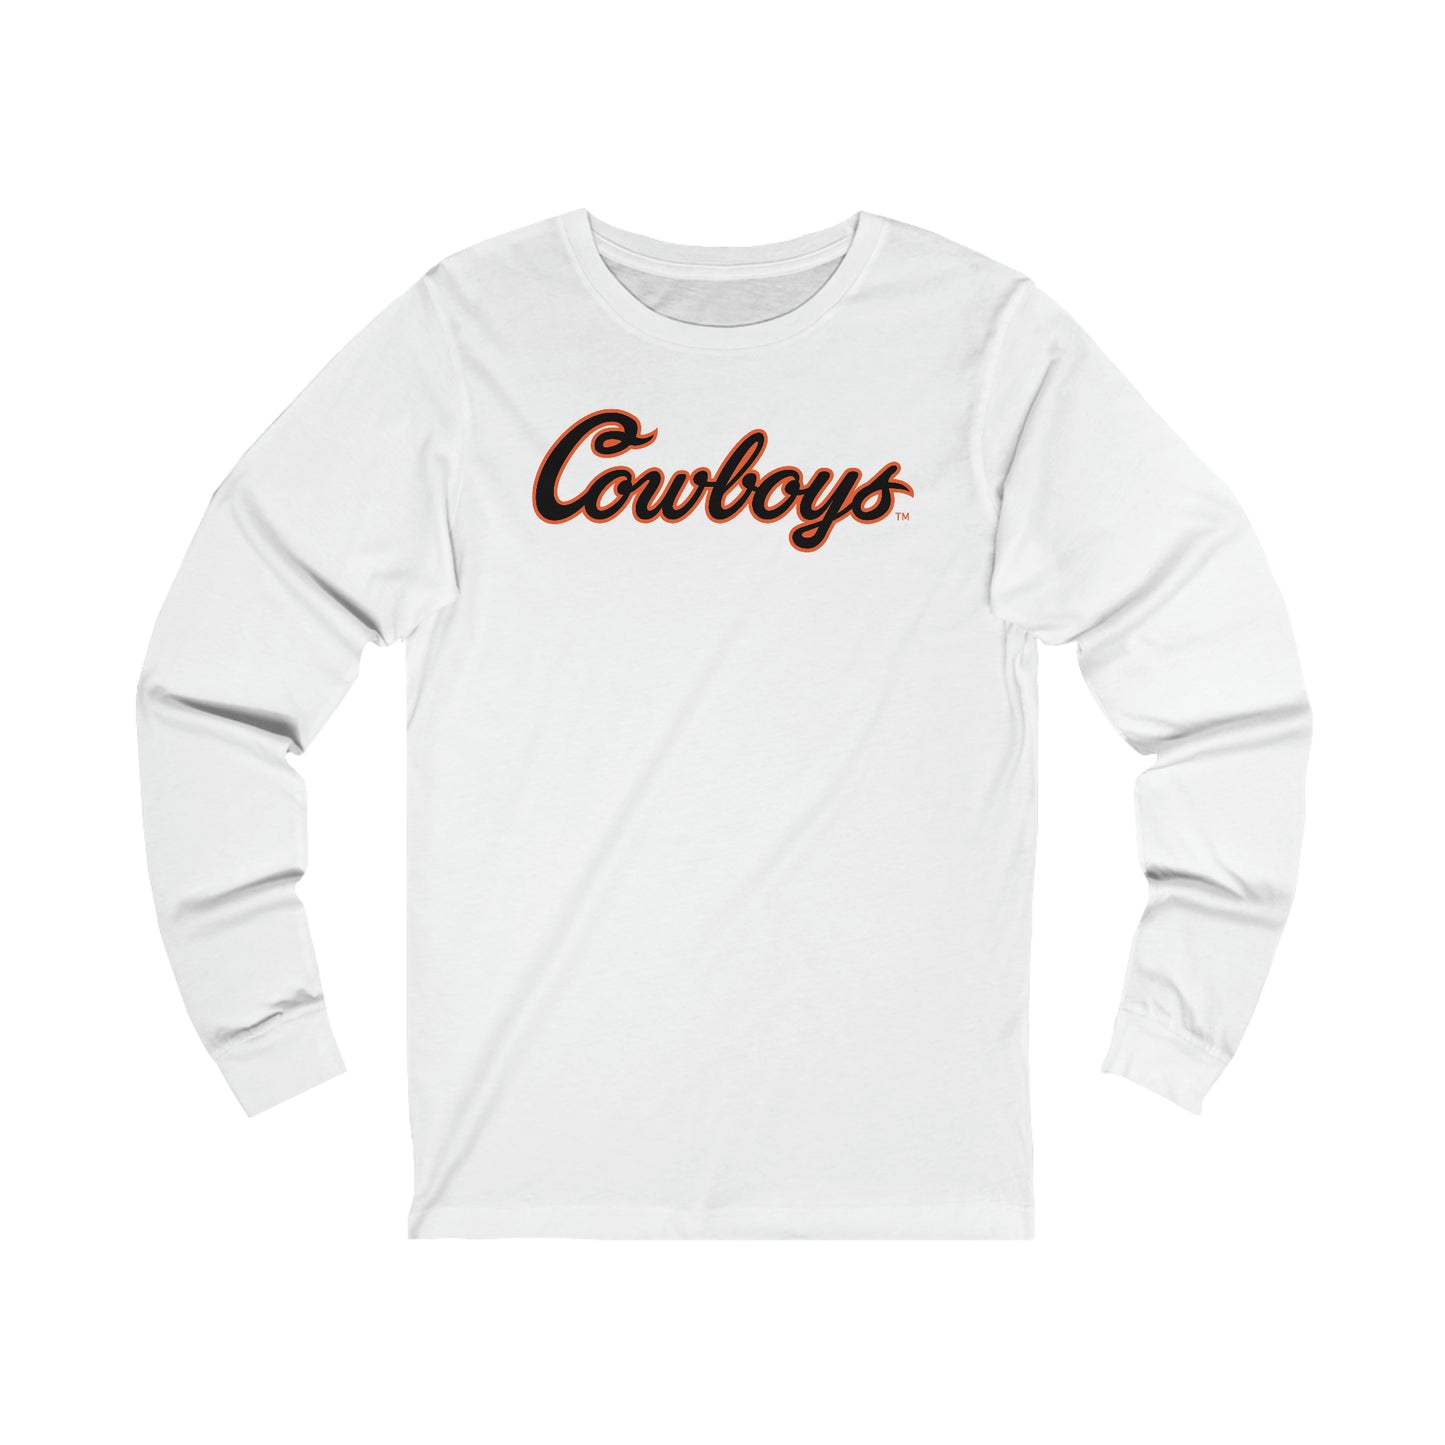 Preston Wilson #74 Cursive Cowboys Long Sleeve T-Shirt